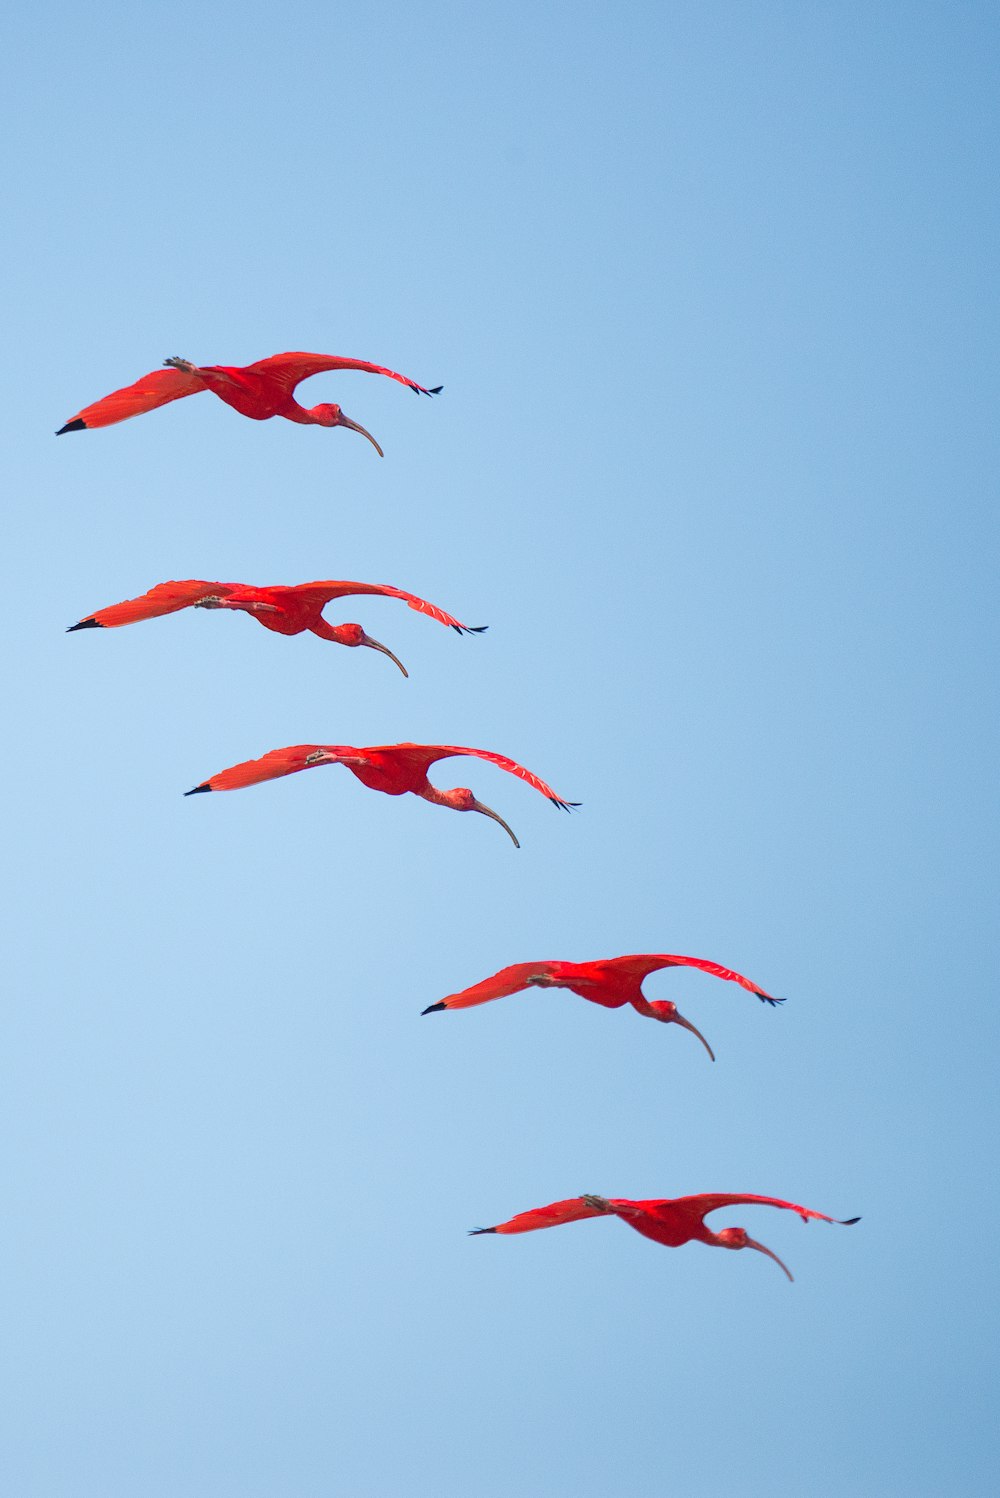 red birdsa flying